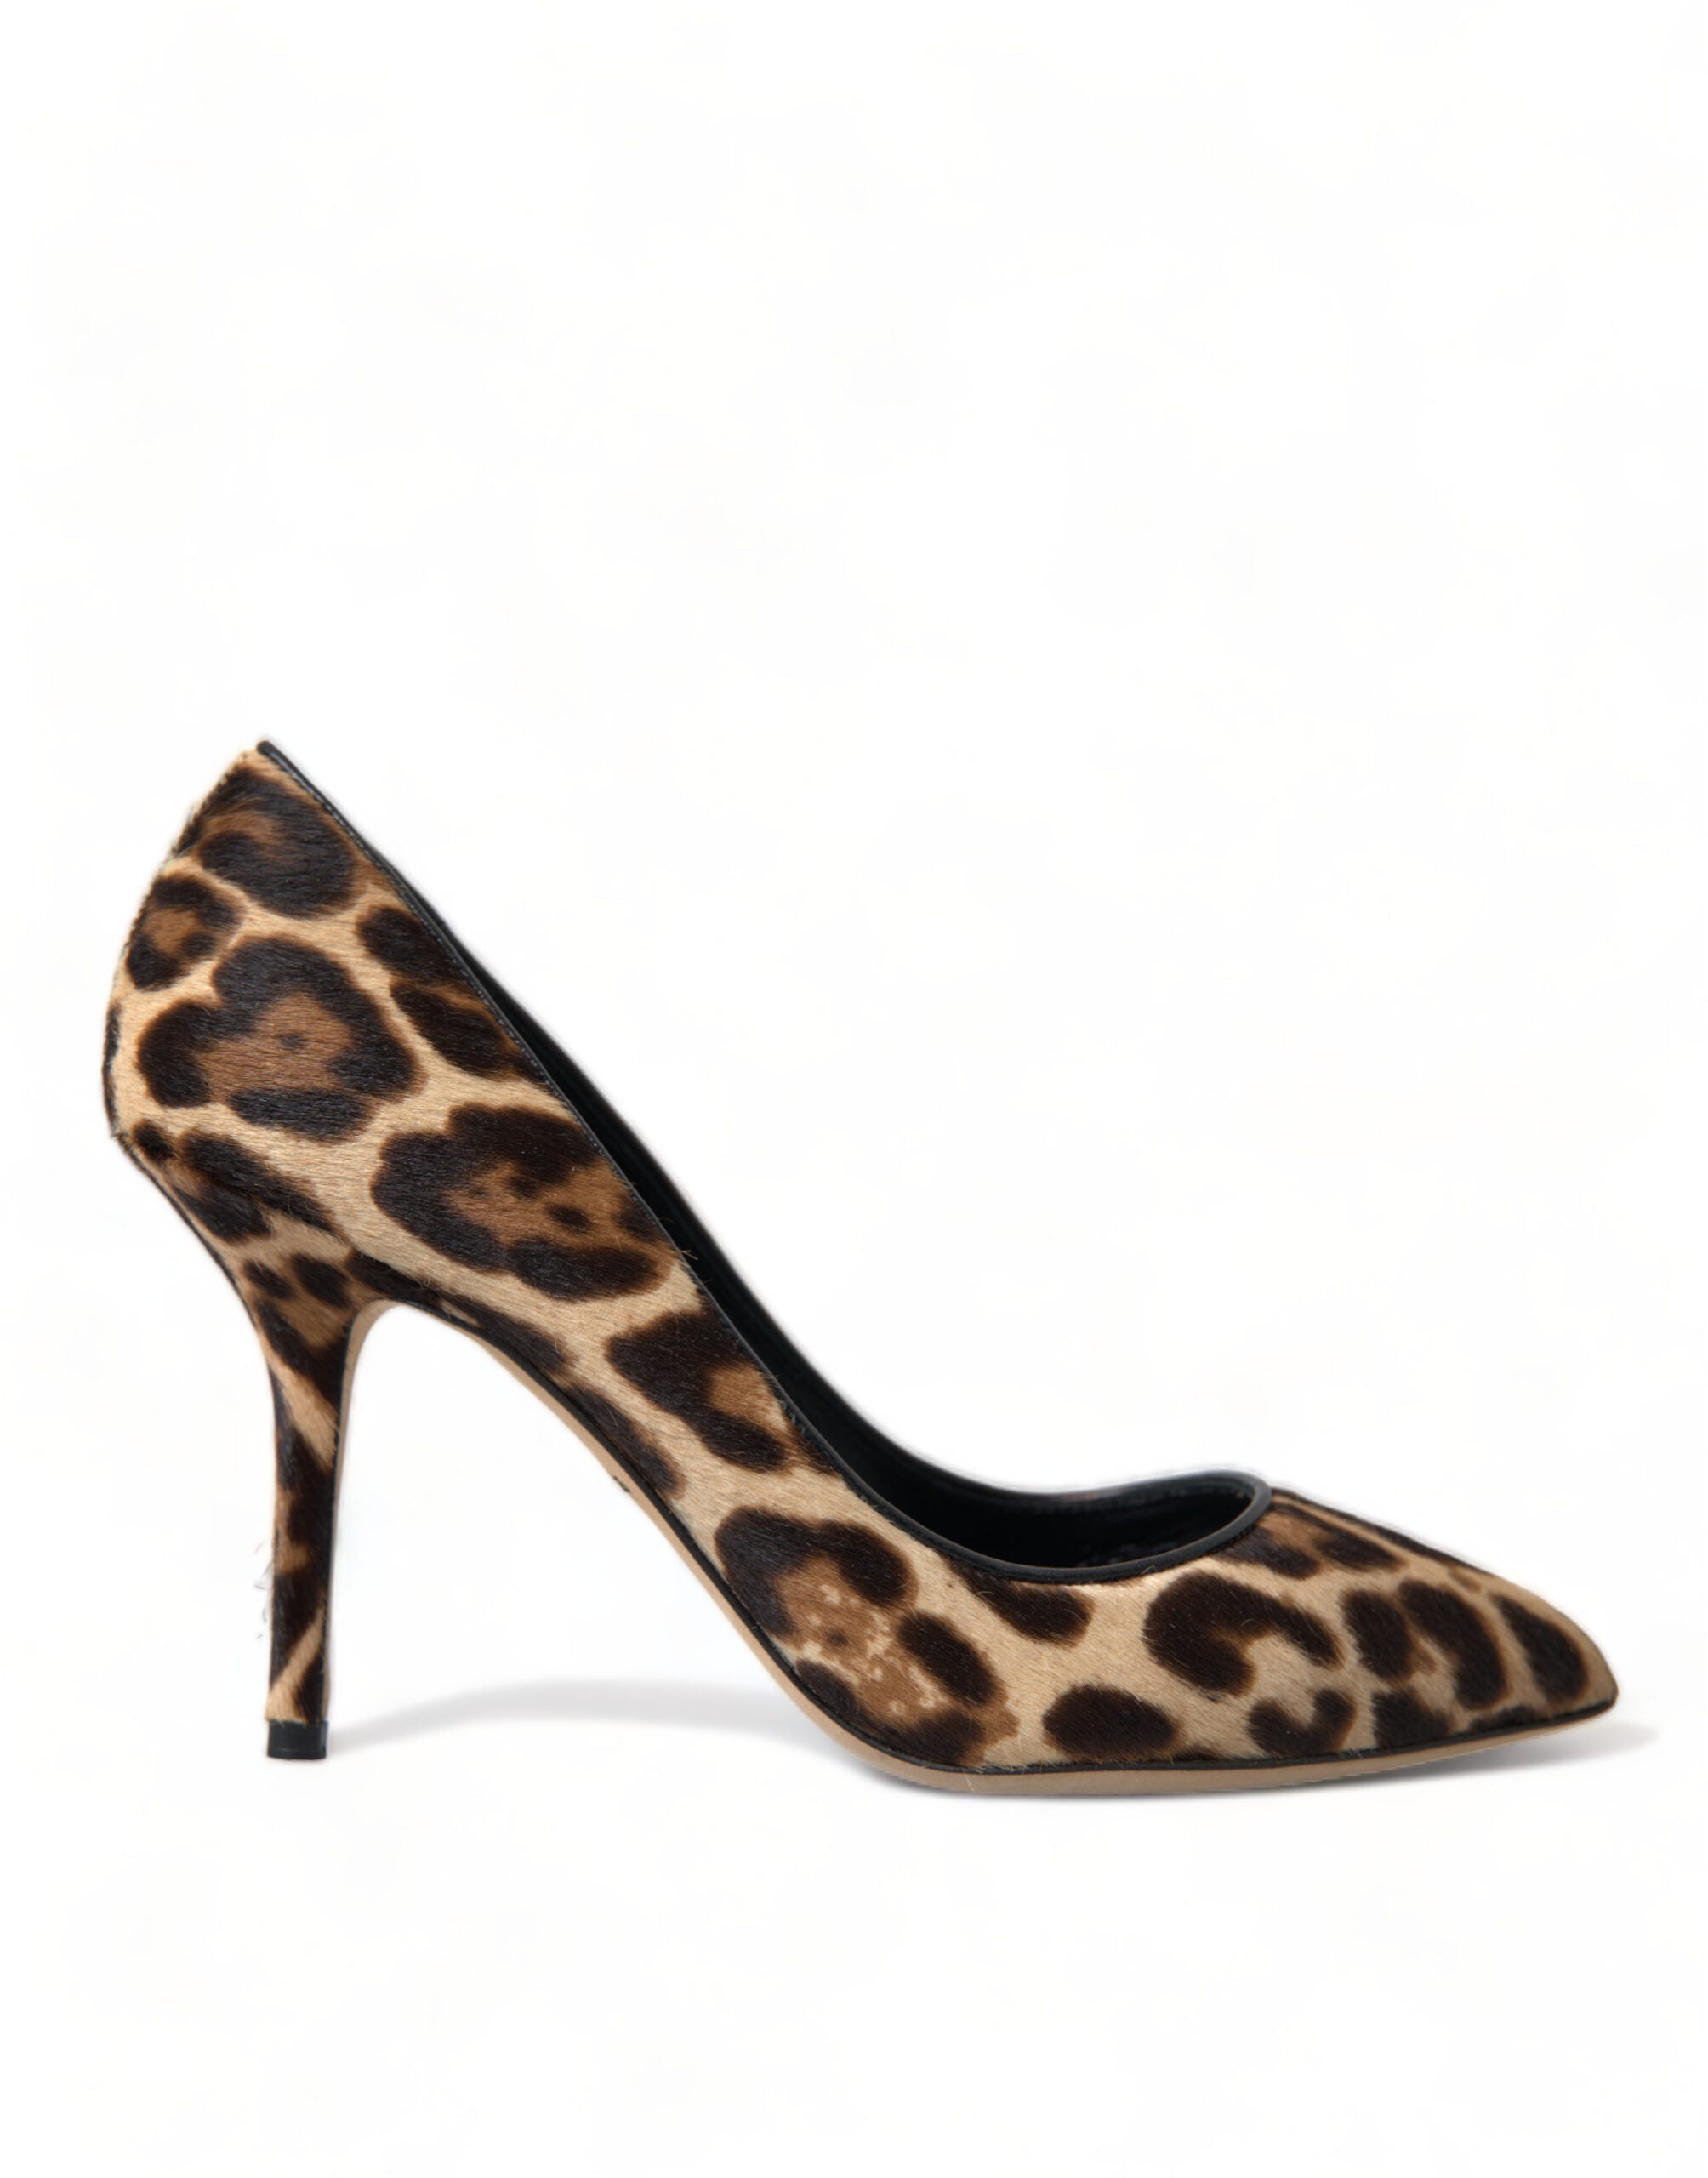 Exquisite Leopard Print Stiletto Pumps - Divitiae Glamour